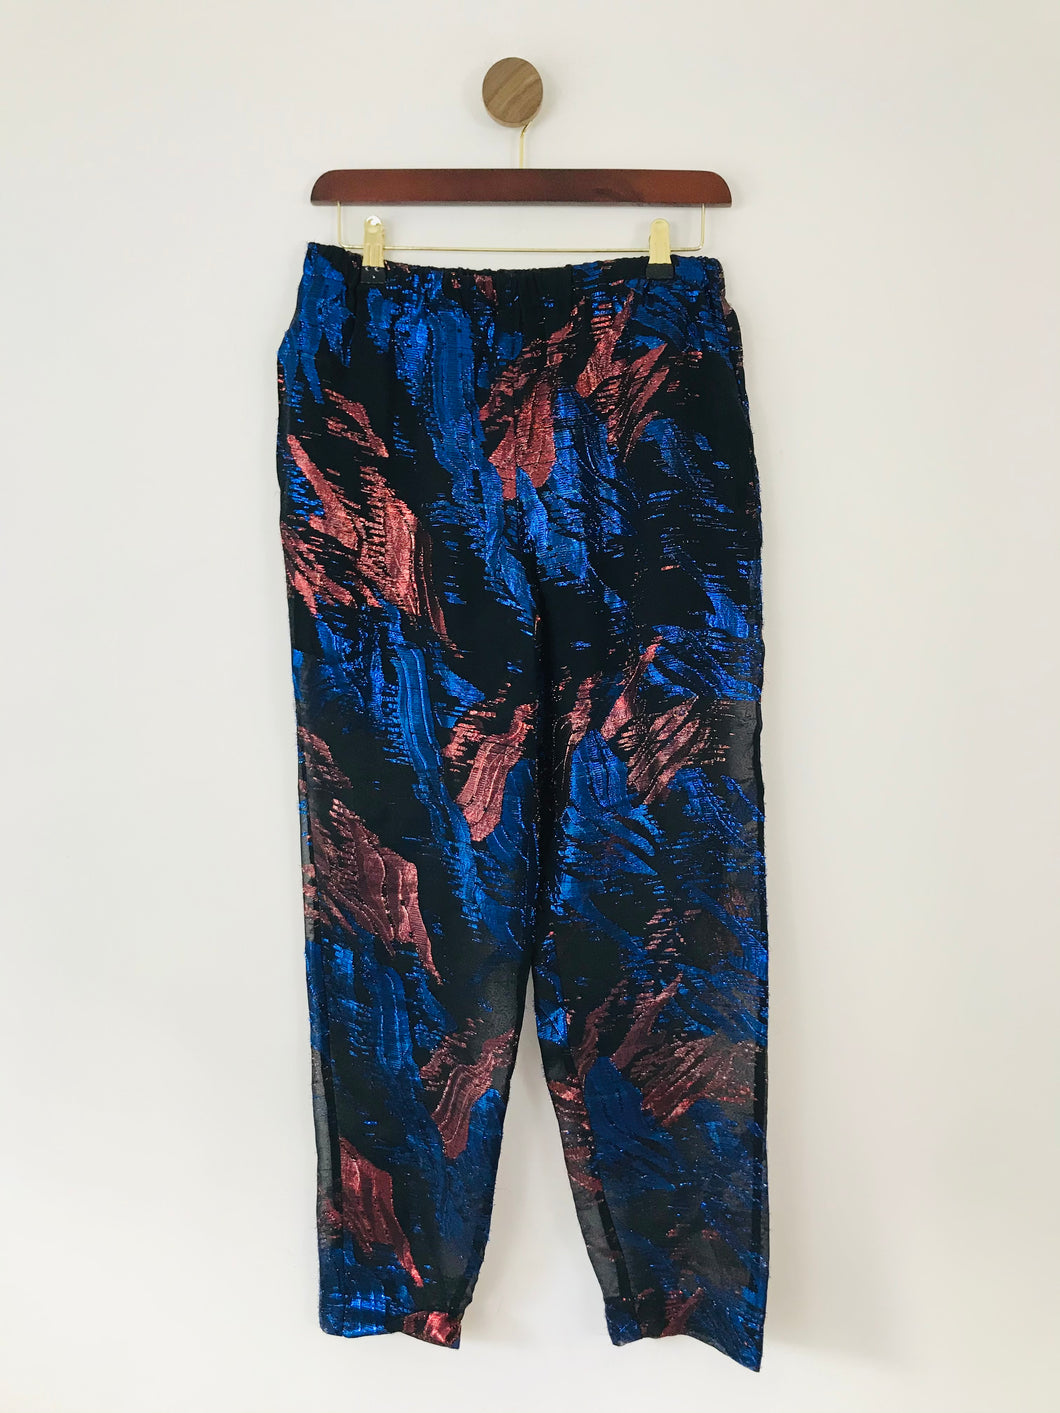 Maje Women's Silk Metallic Culottes Trousers | 2 UK8-10 | Multicolour